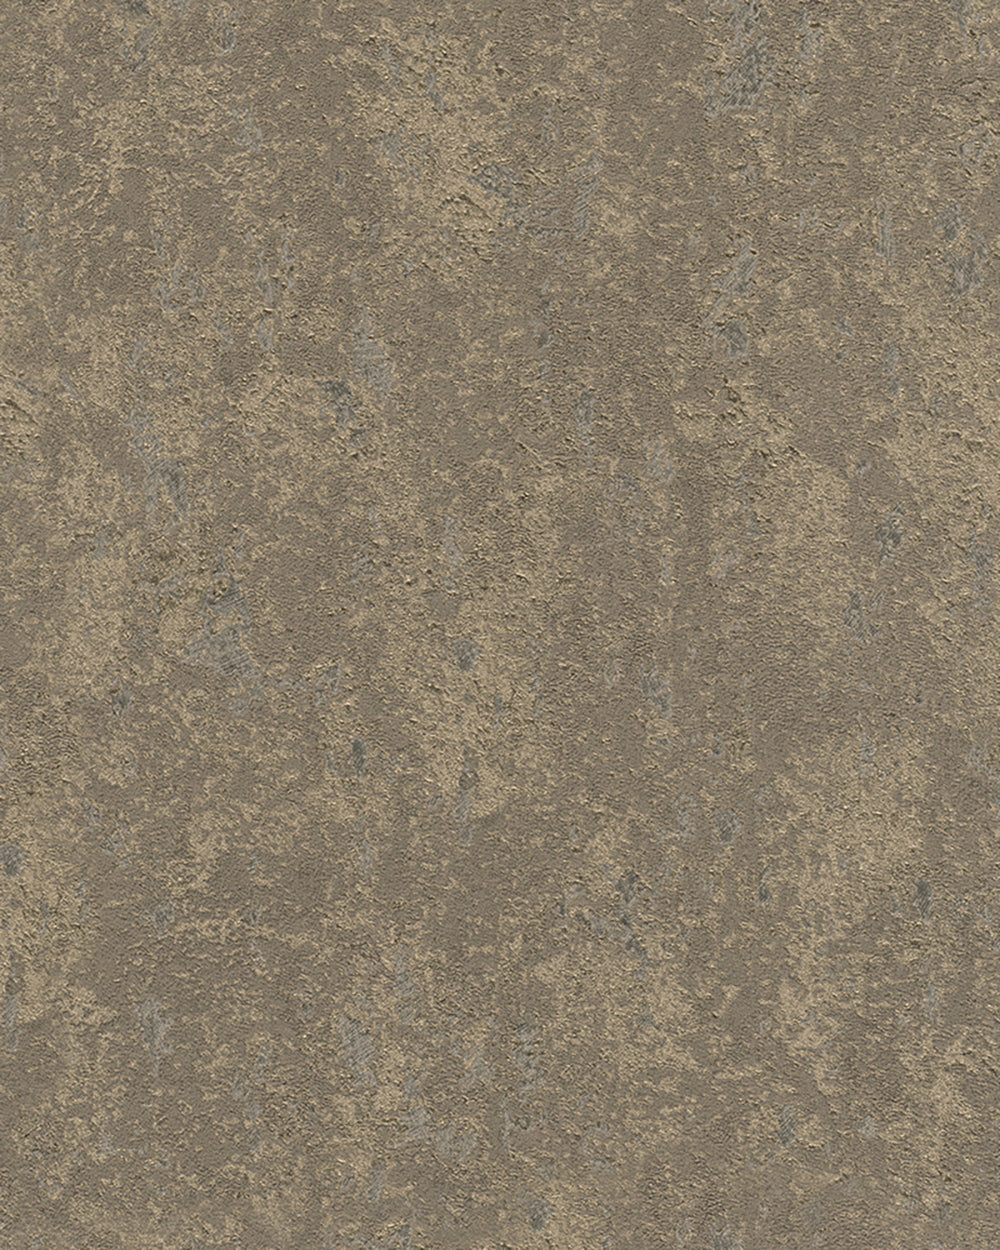 Avalon - Textured Distressed Concrete bold wallpaper Marburg Roll Bronze  31646